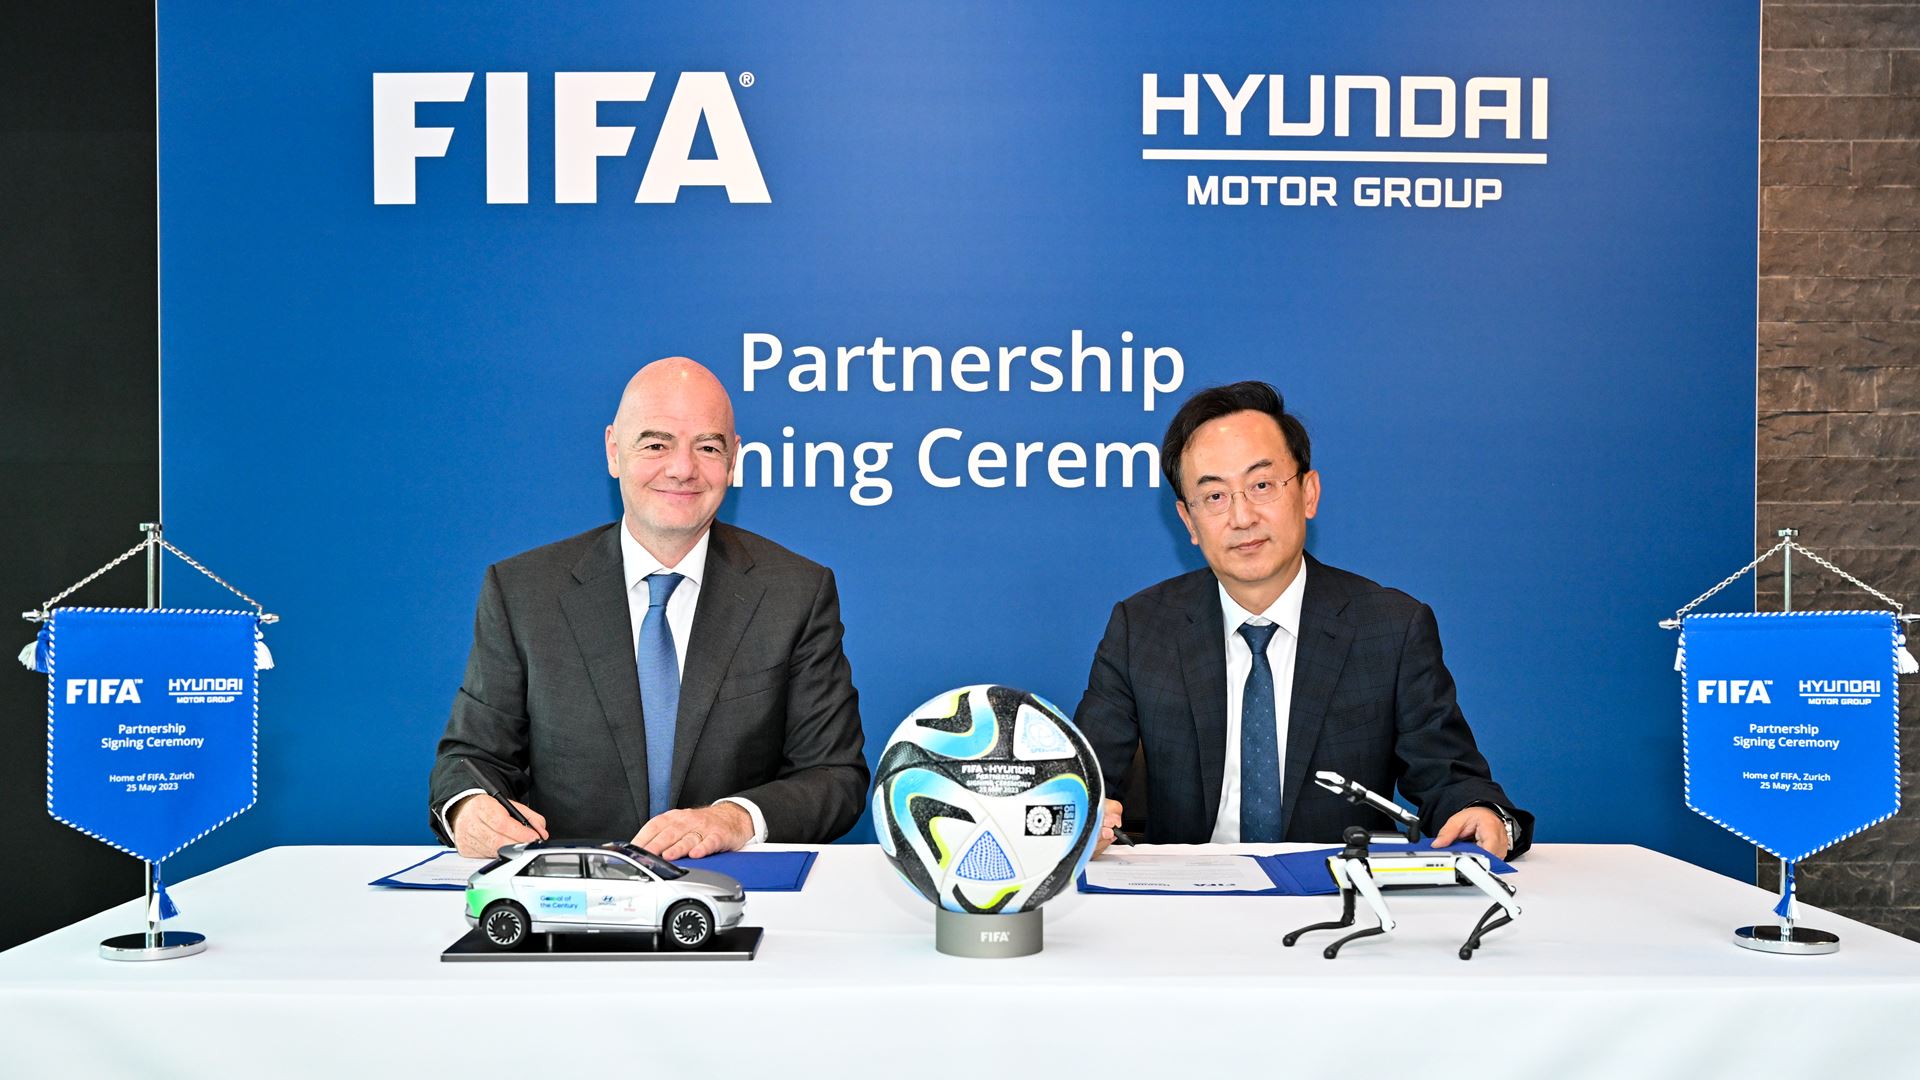 Hyundai FIFA Partnership Renewal